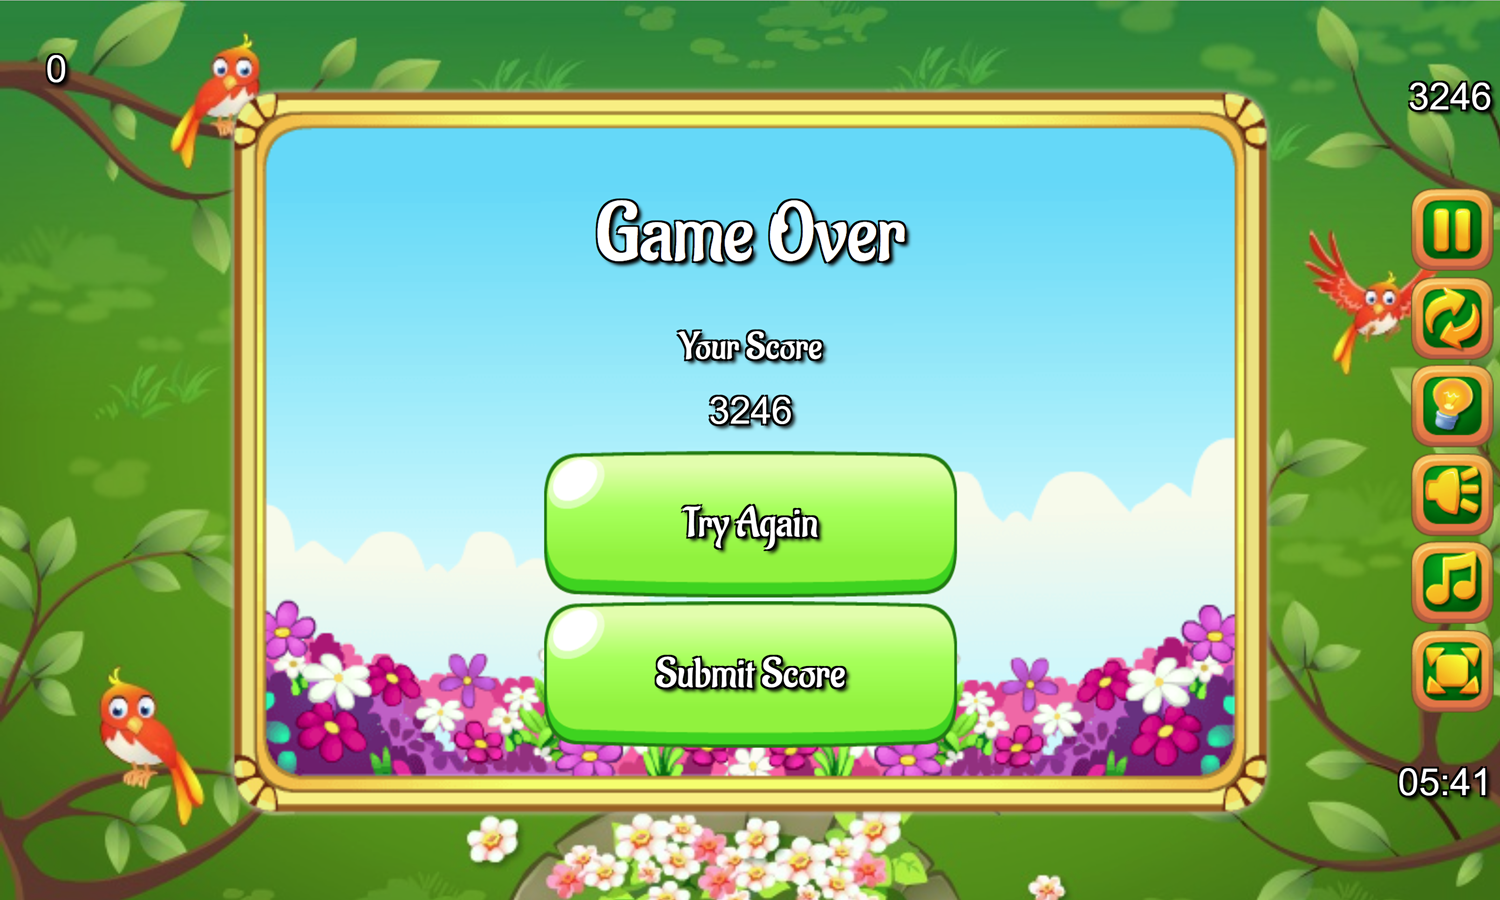 Mahjong Gardens Game Over Screen Screenshot.